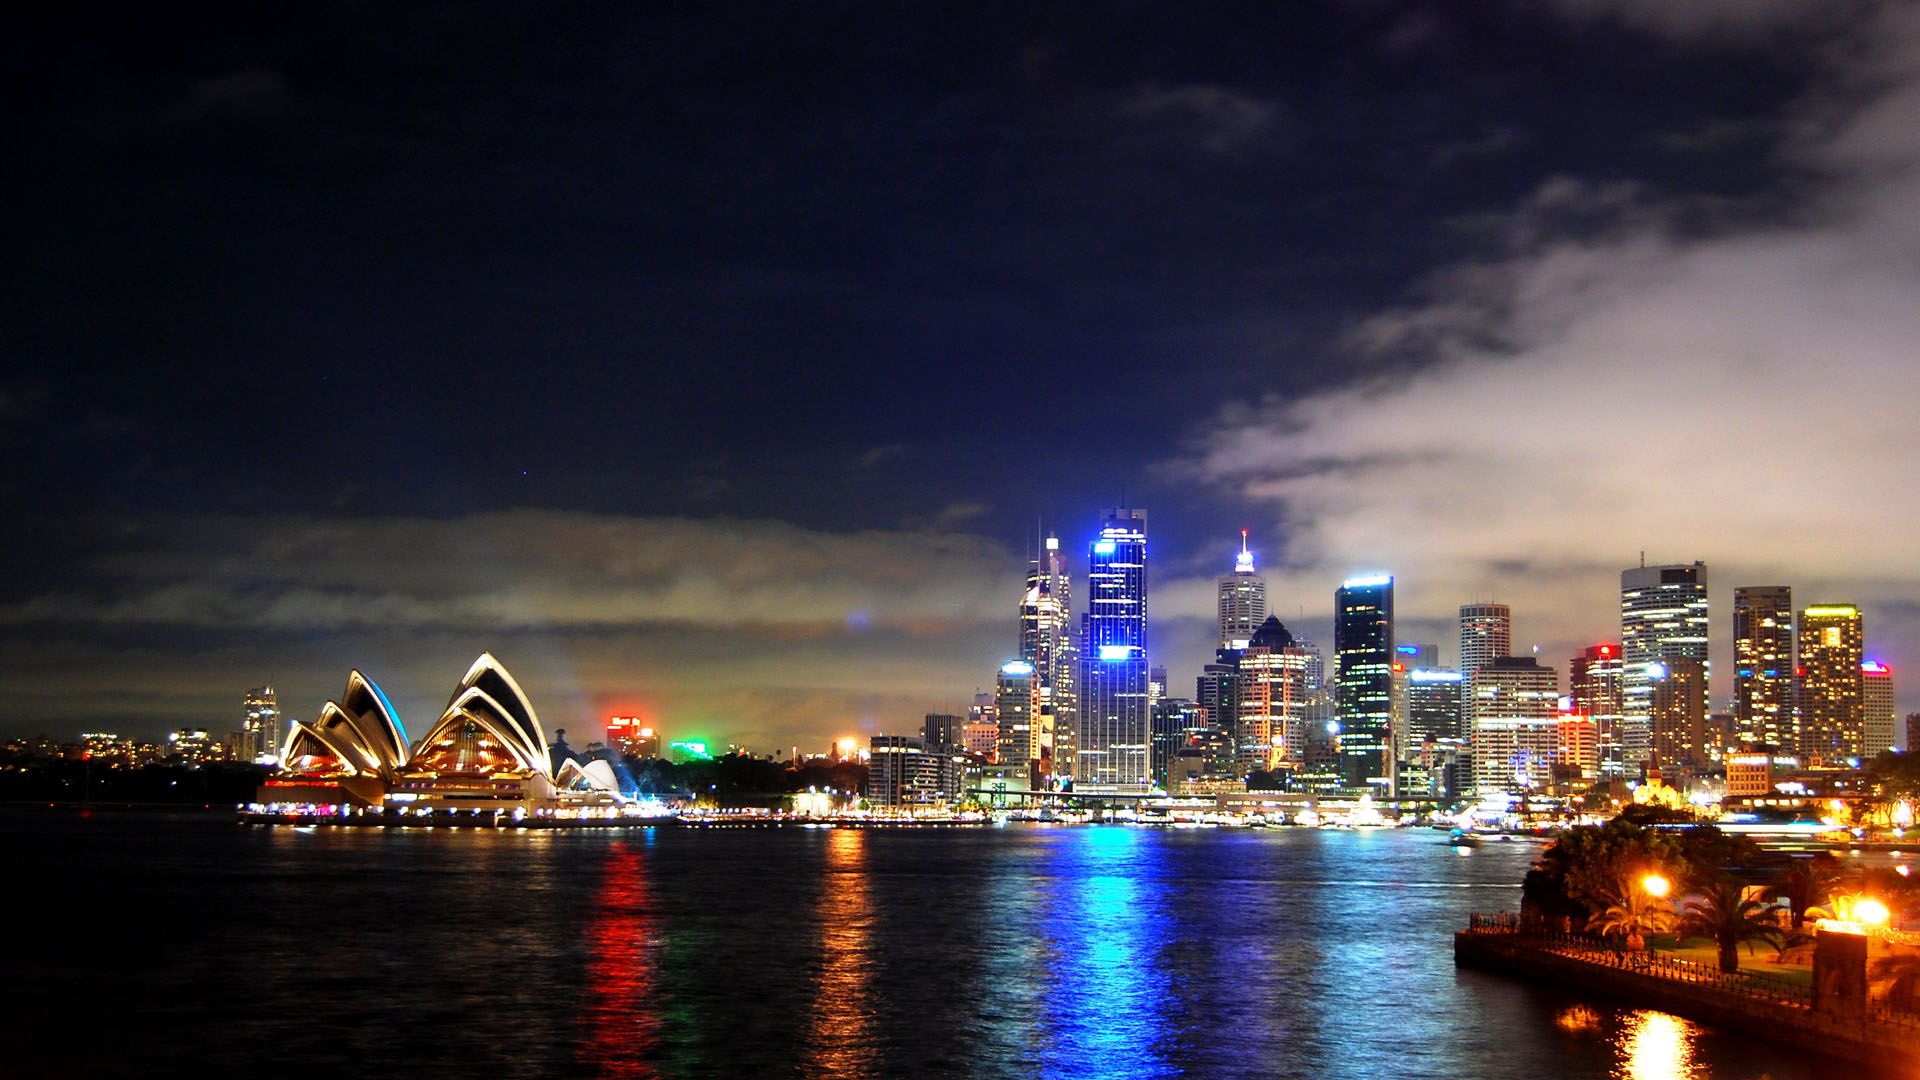 File:Sydney-harbour-bei-nacht-wallpaper.JPG - Wikimedia Commons